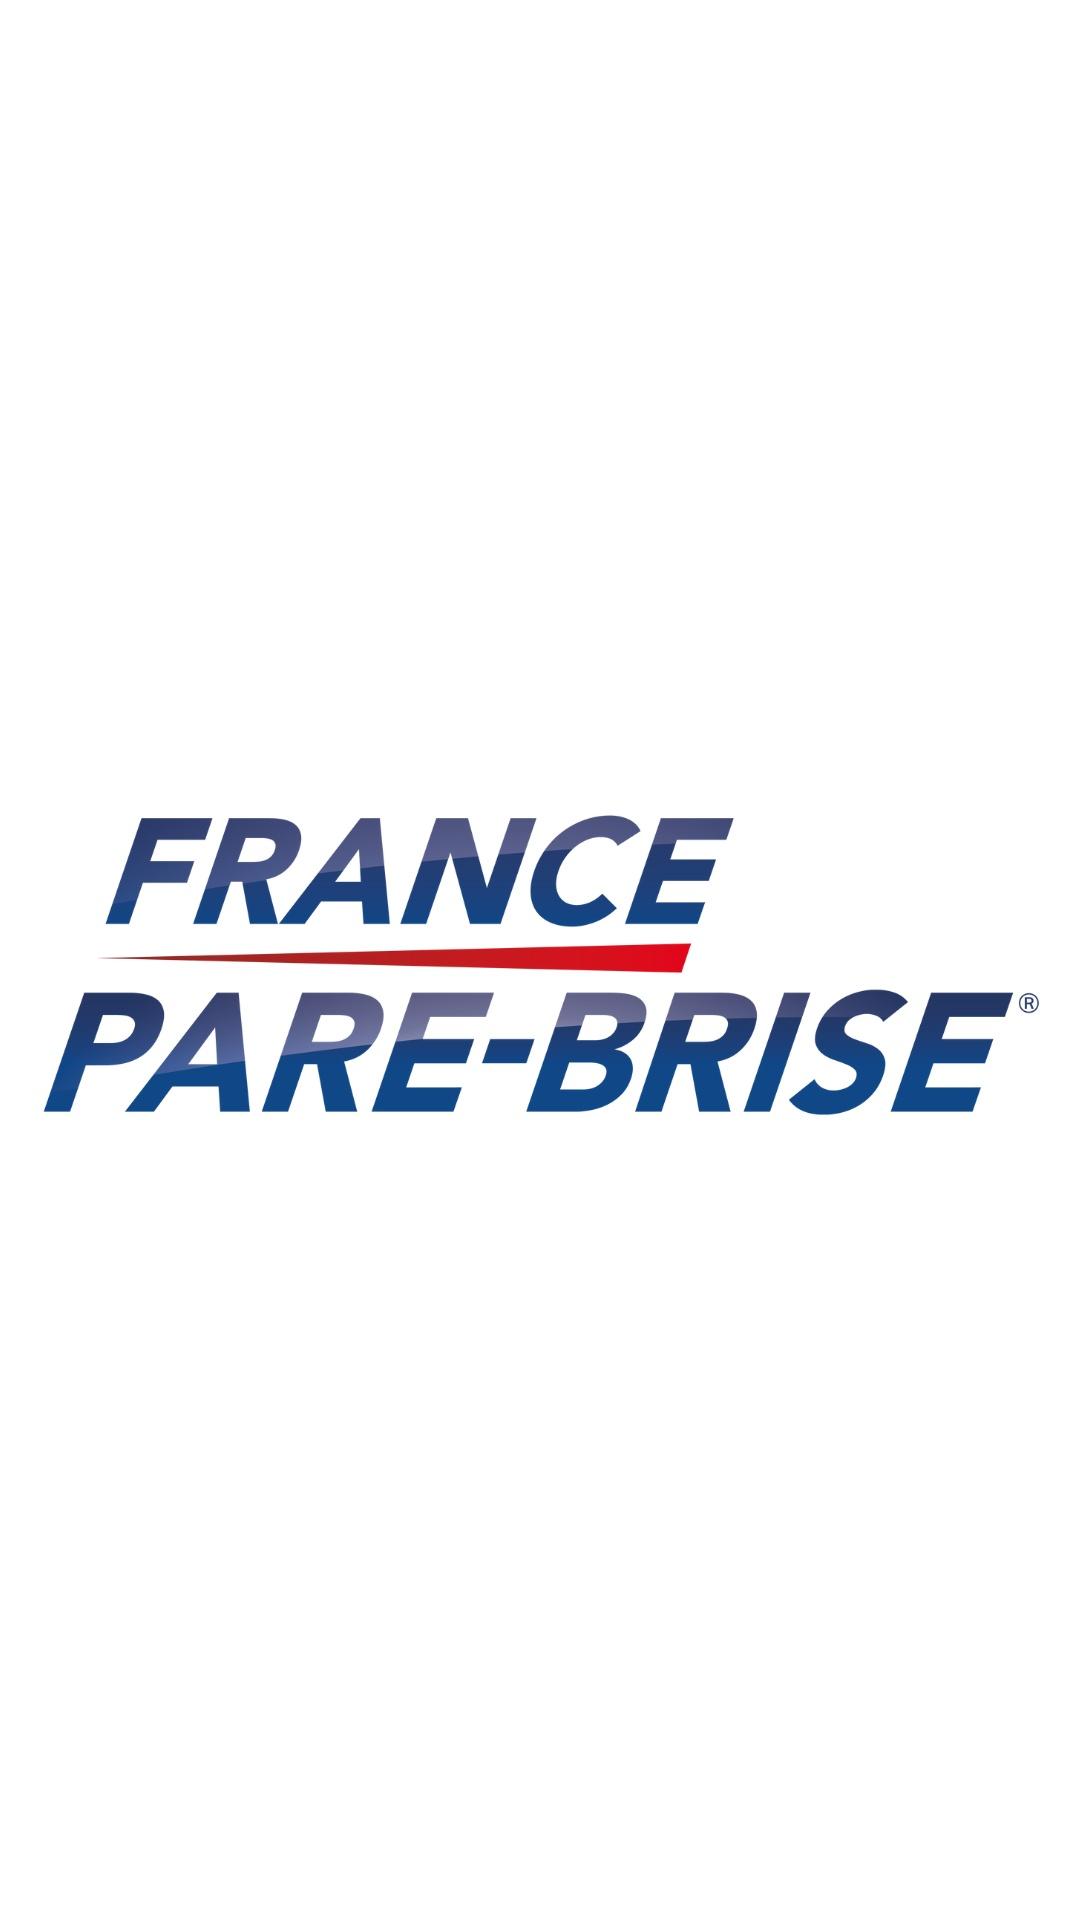 France Pare-brise Cavan